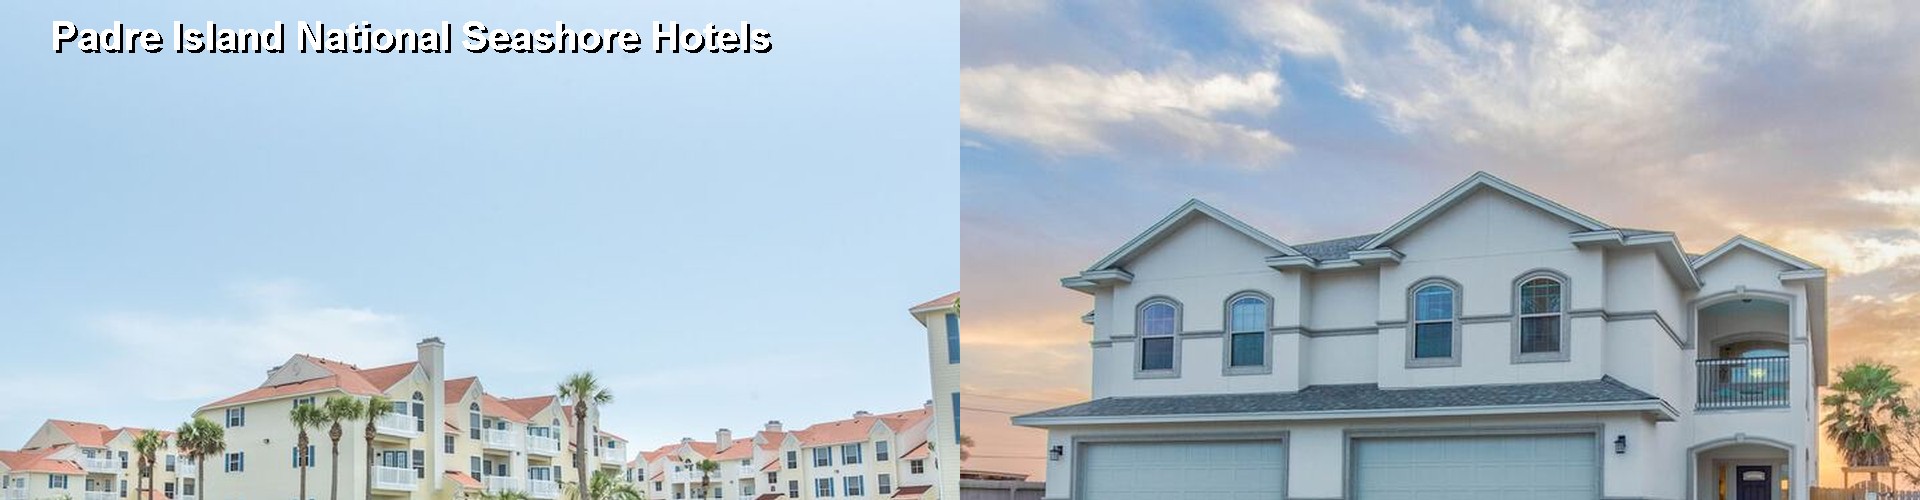 5 Best Hotels near Padre Island National Seashore